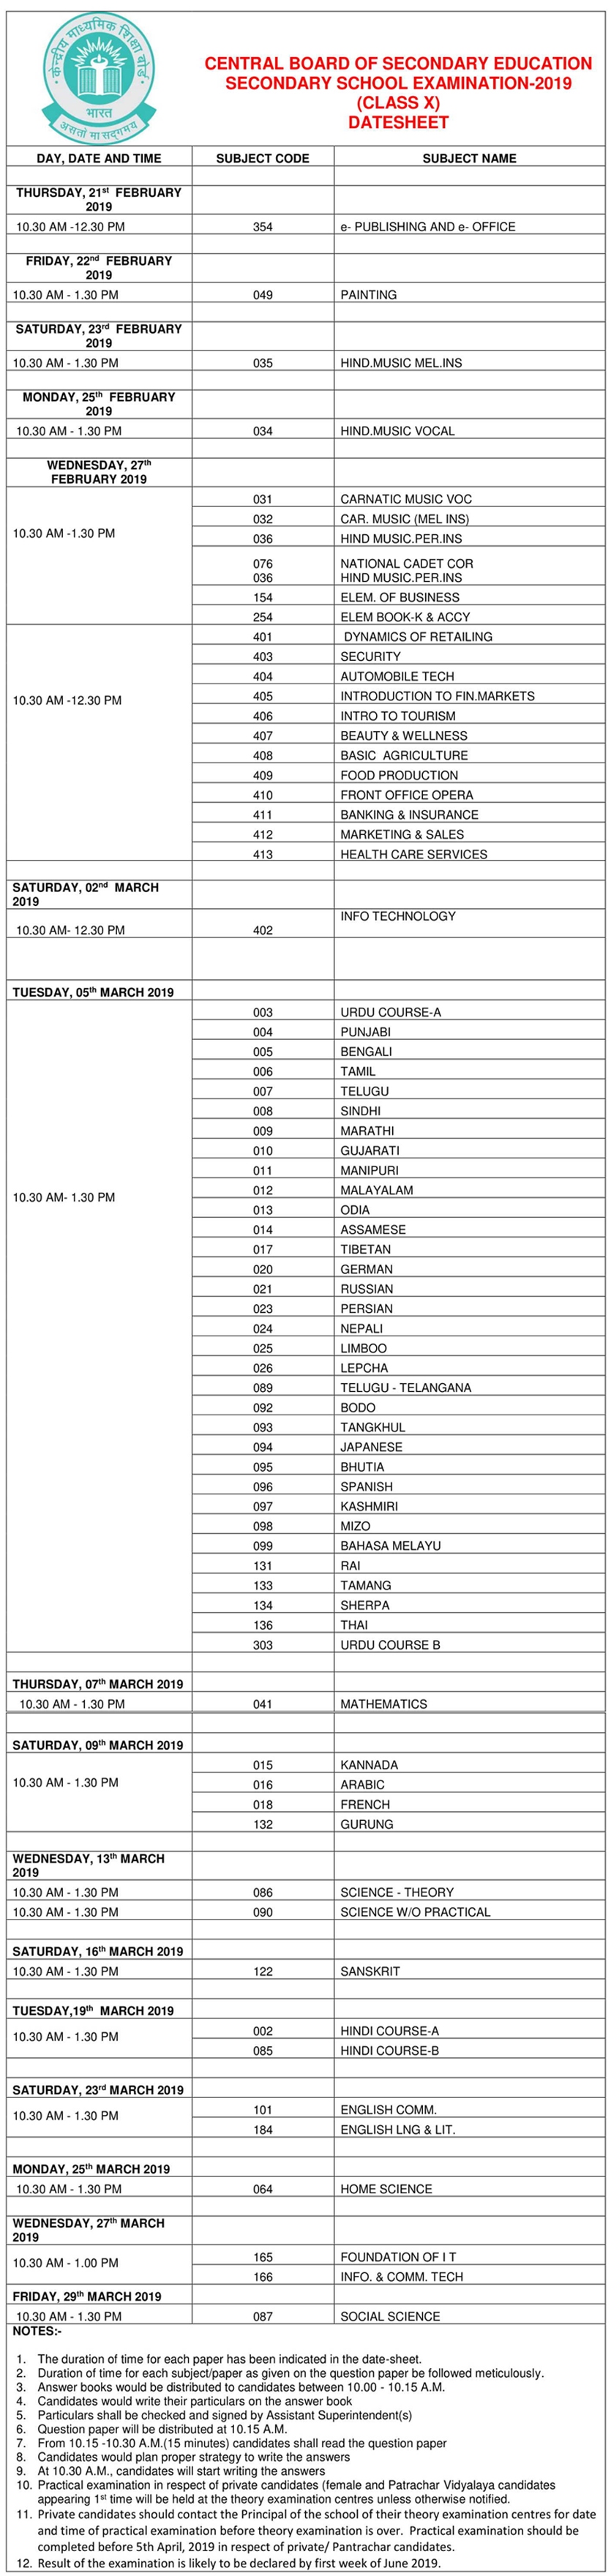 Cbse Class 10 Date Sheet 2019 Time Table Schedule Alma Matters